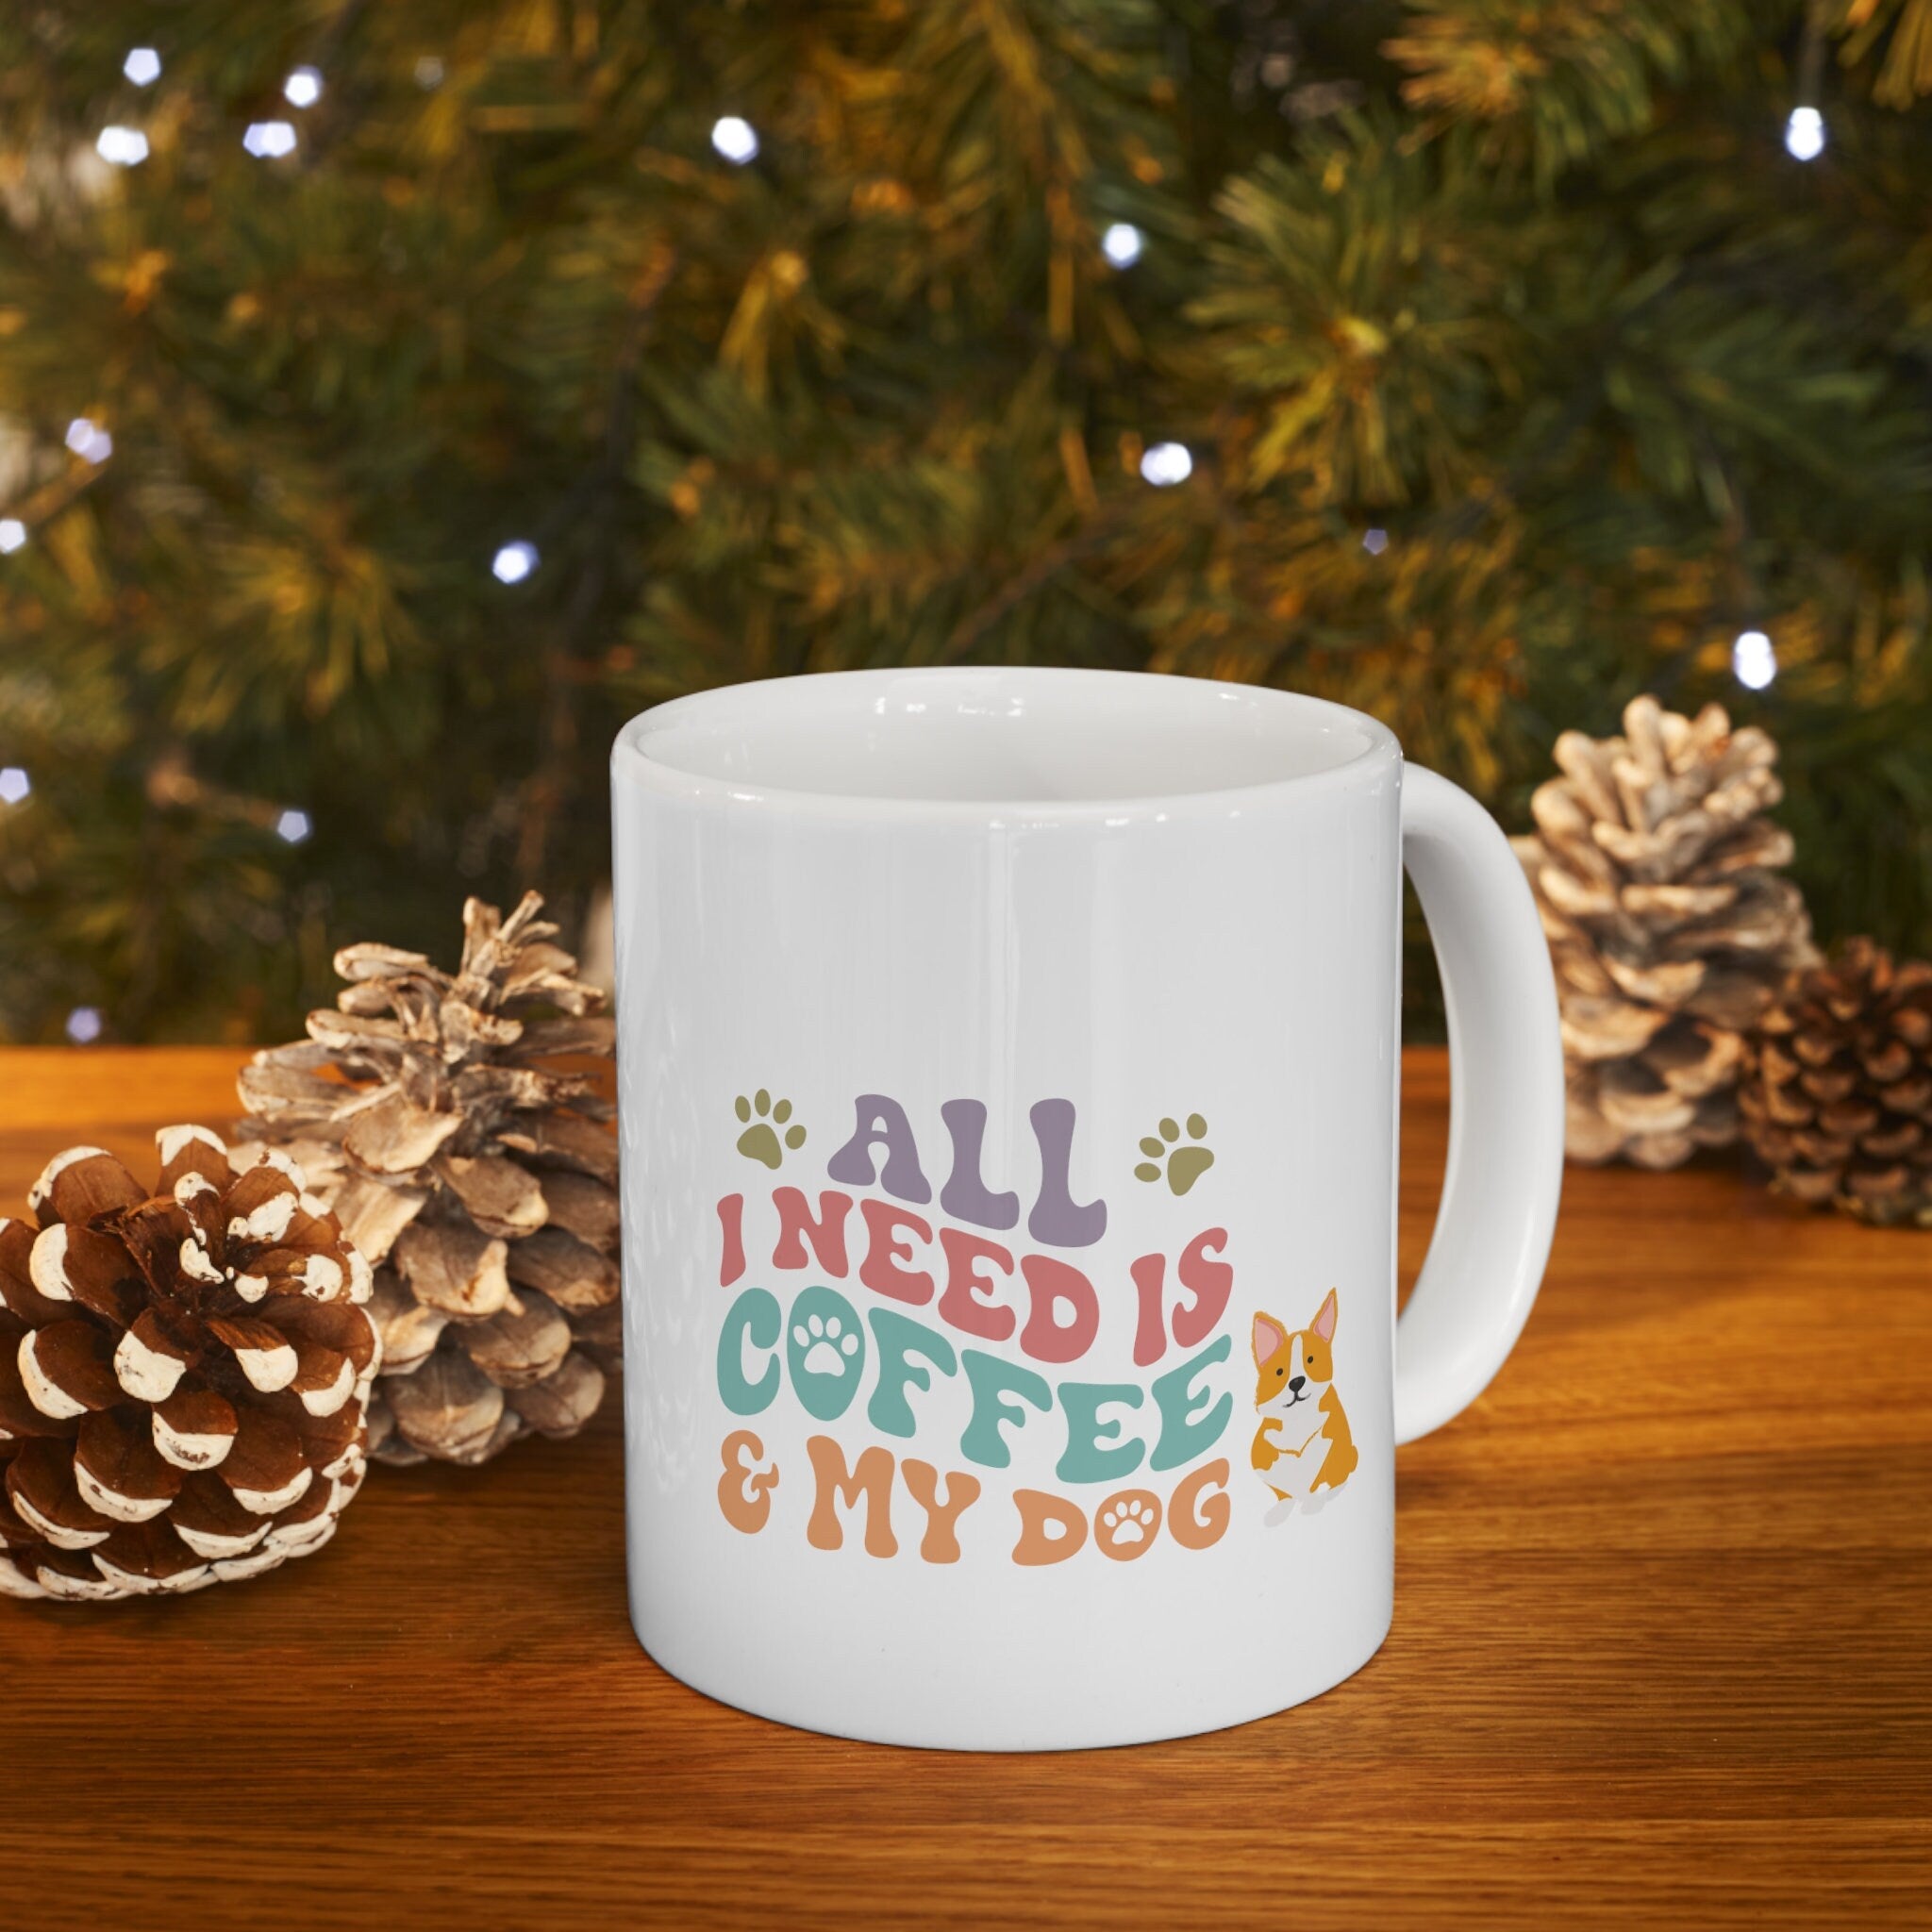 Corgi Ceramic Mug Gift for Her, Him, Corgi dog Lovers Christmas Gift For Best Friend, corgi dad, corgi gift, corgi lover, corgi mom Gift